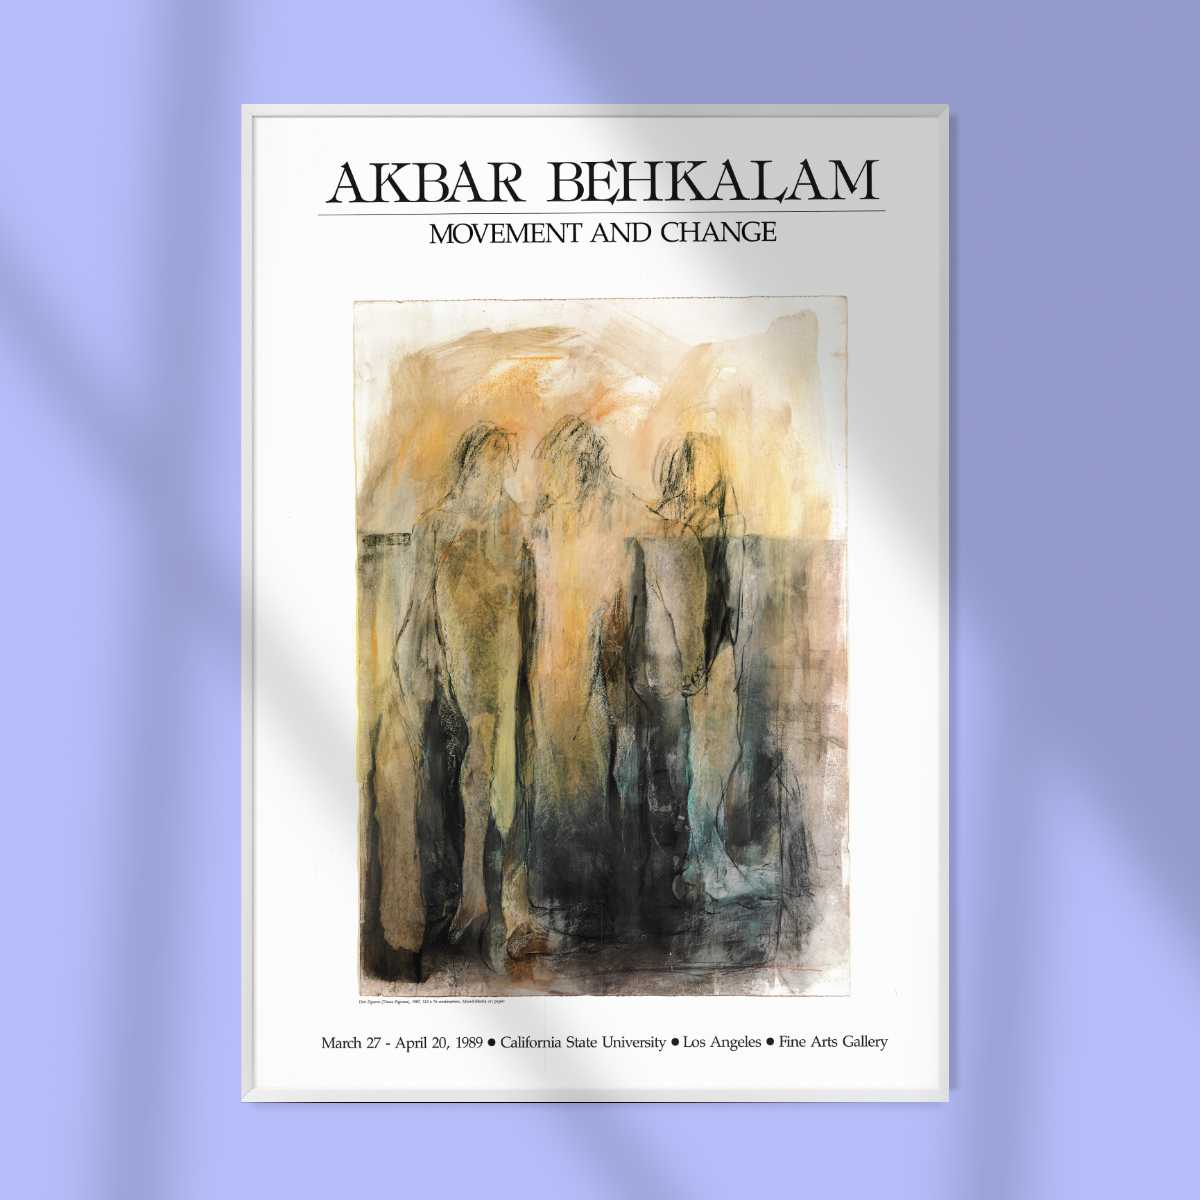 Behkalam, Akbar - Movement and Change, Ausstellungsplakat, Los Angeles, 1989